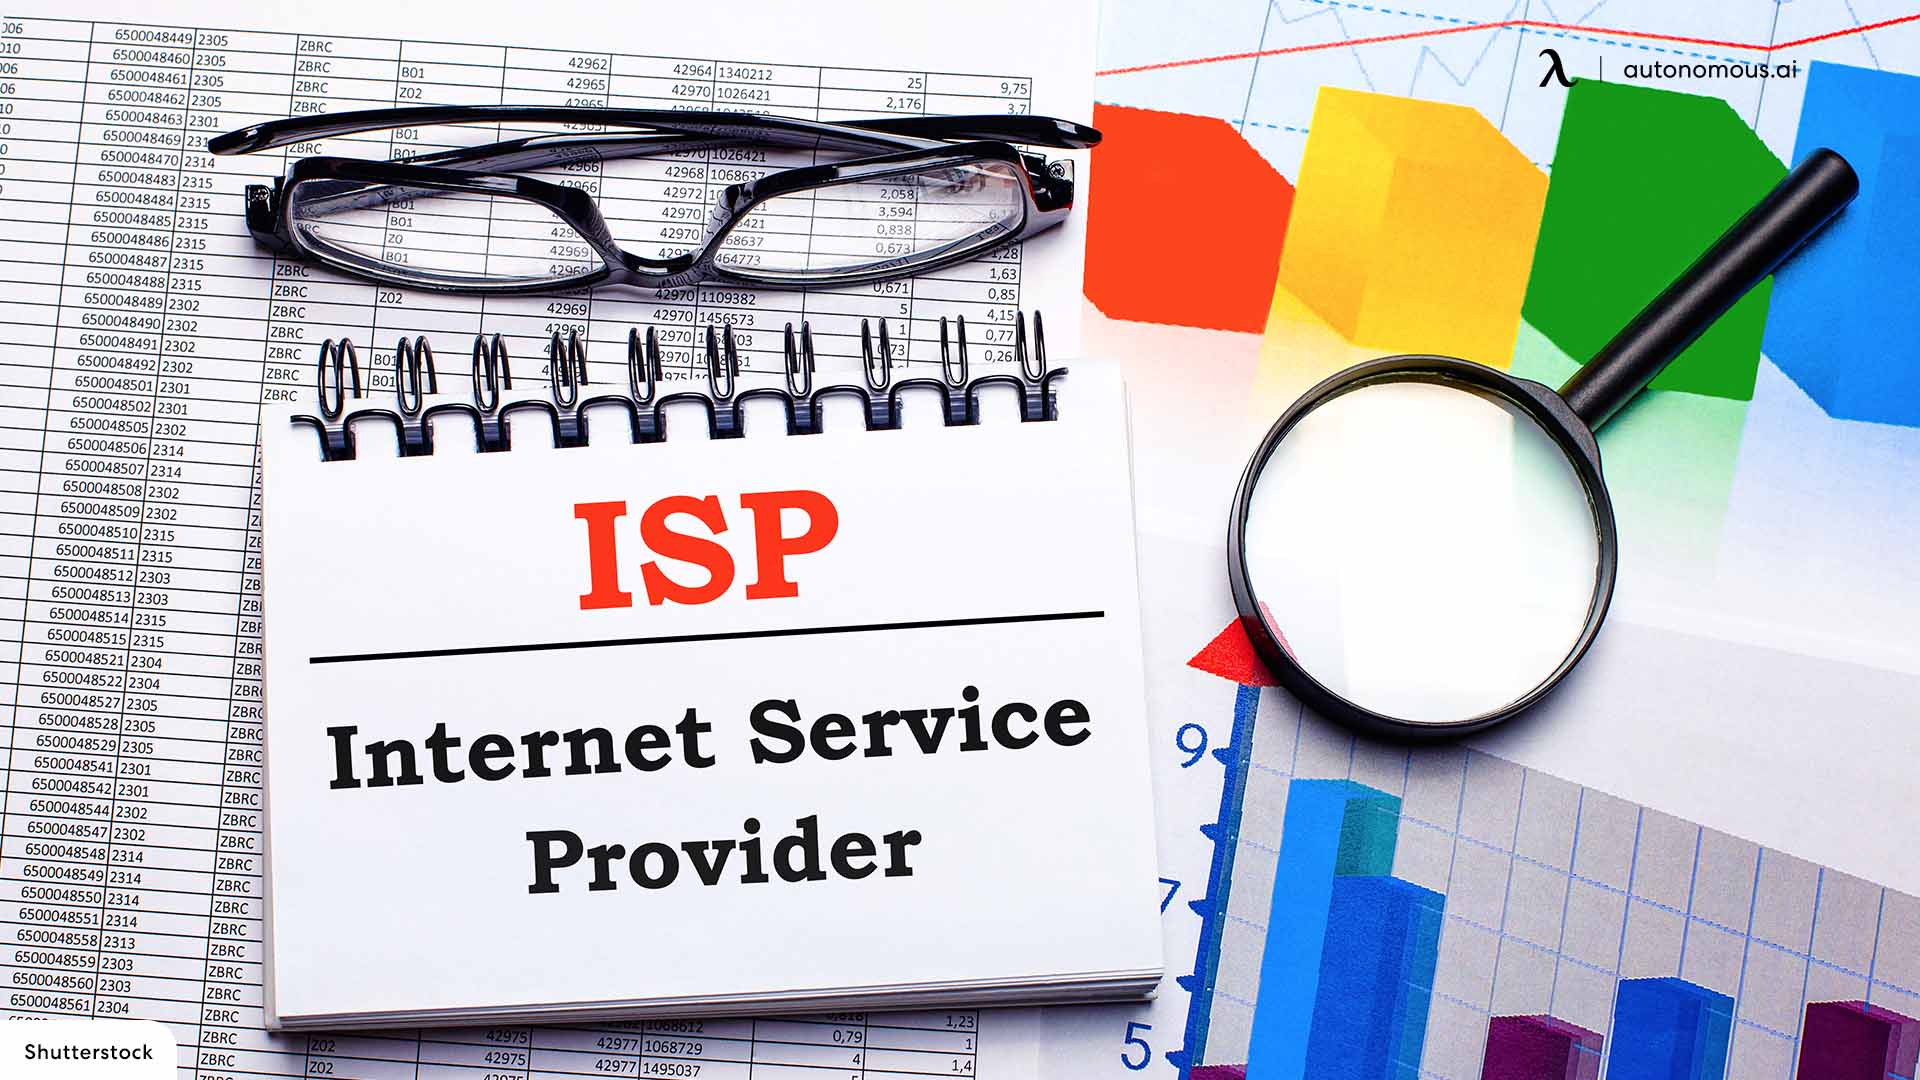 Your internet service provider